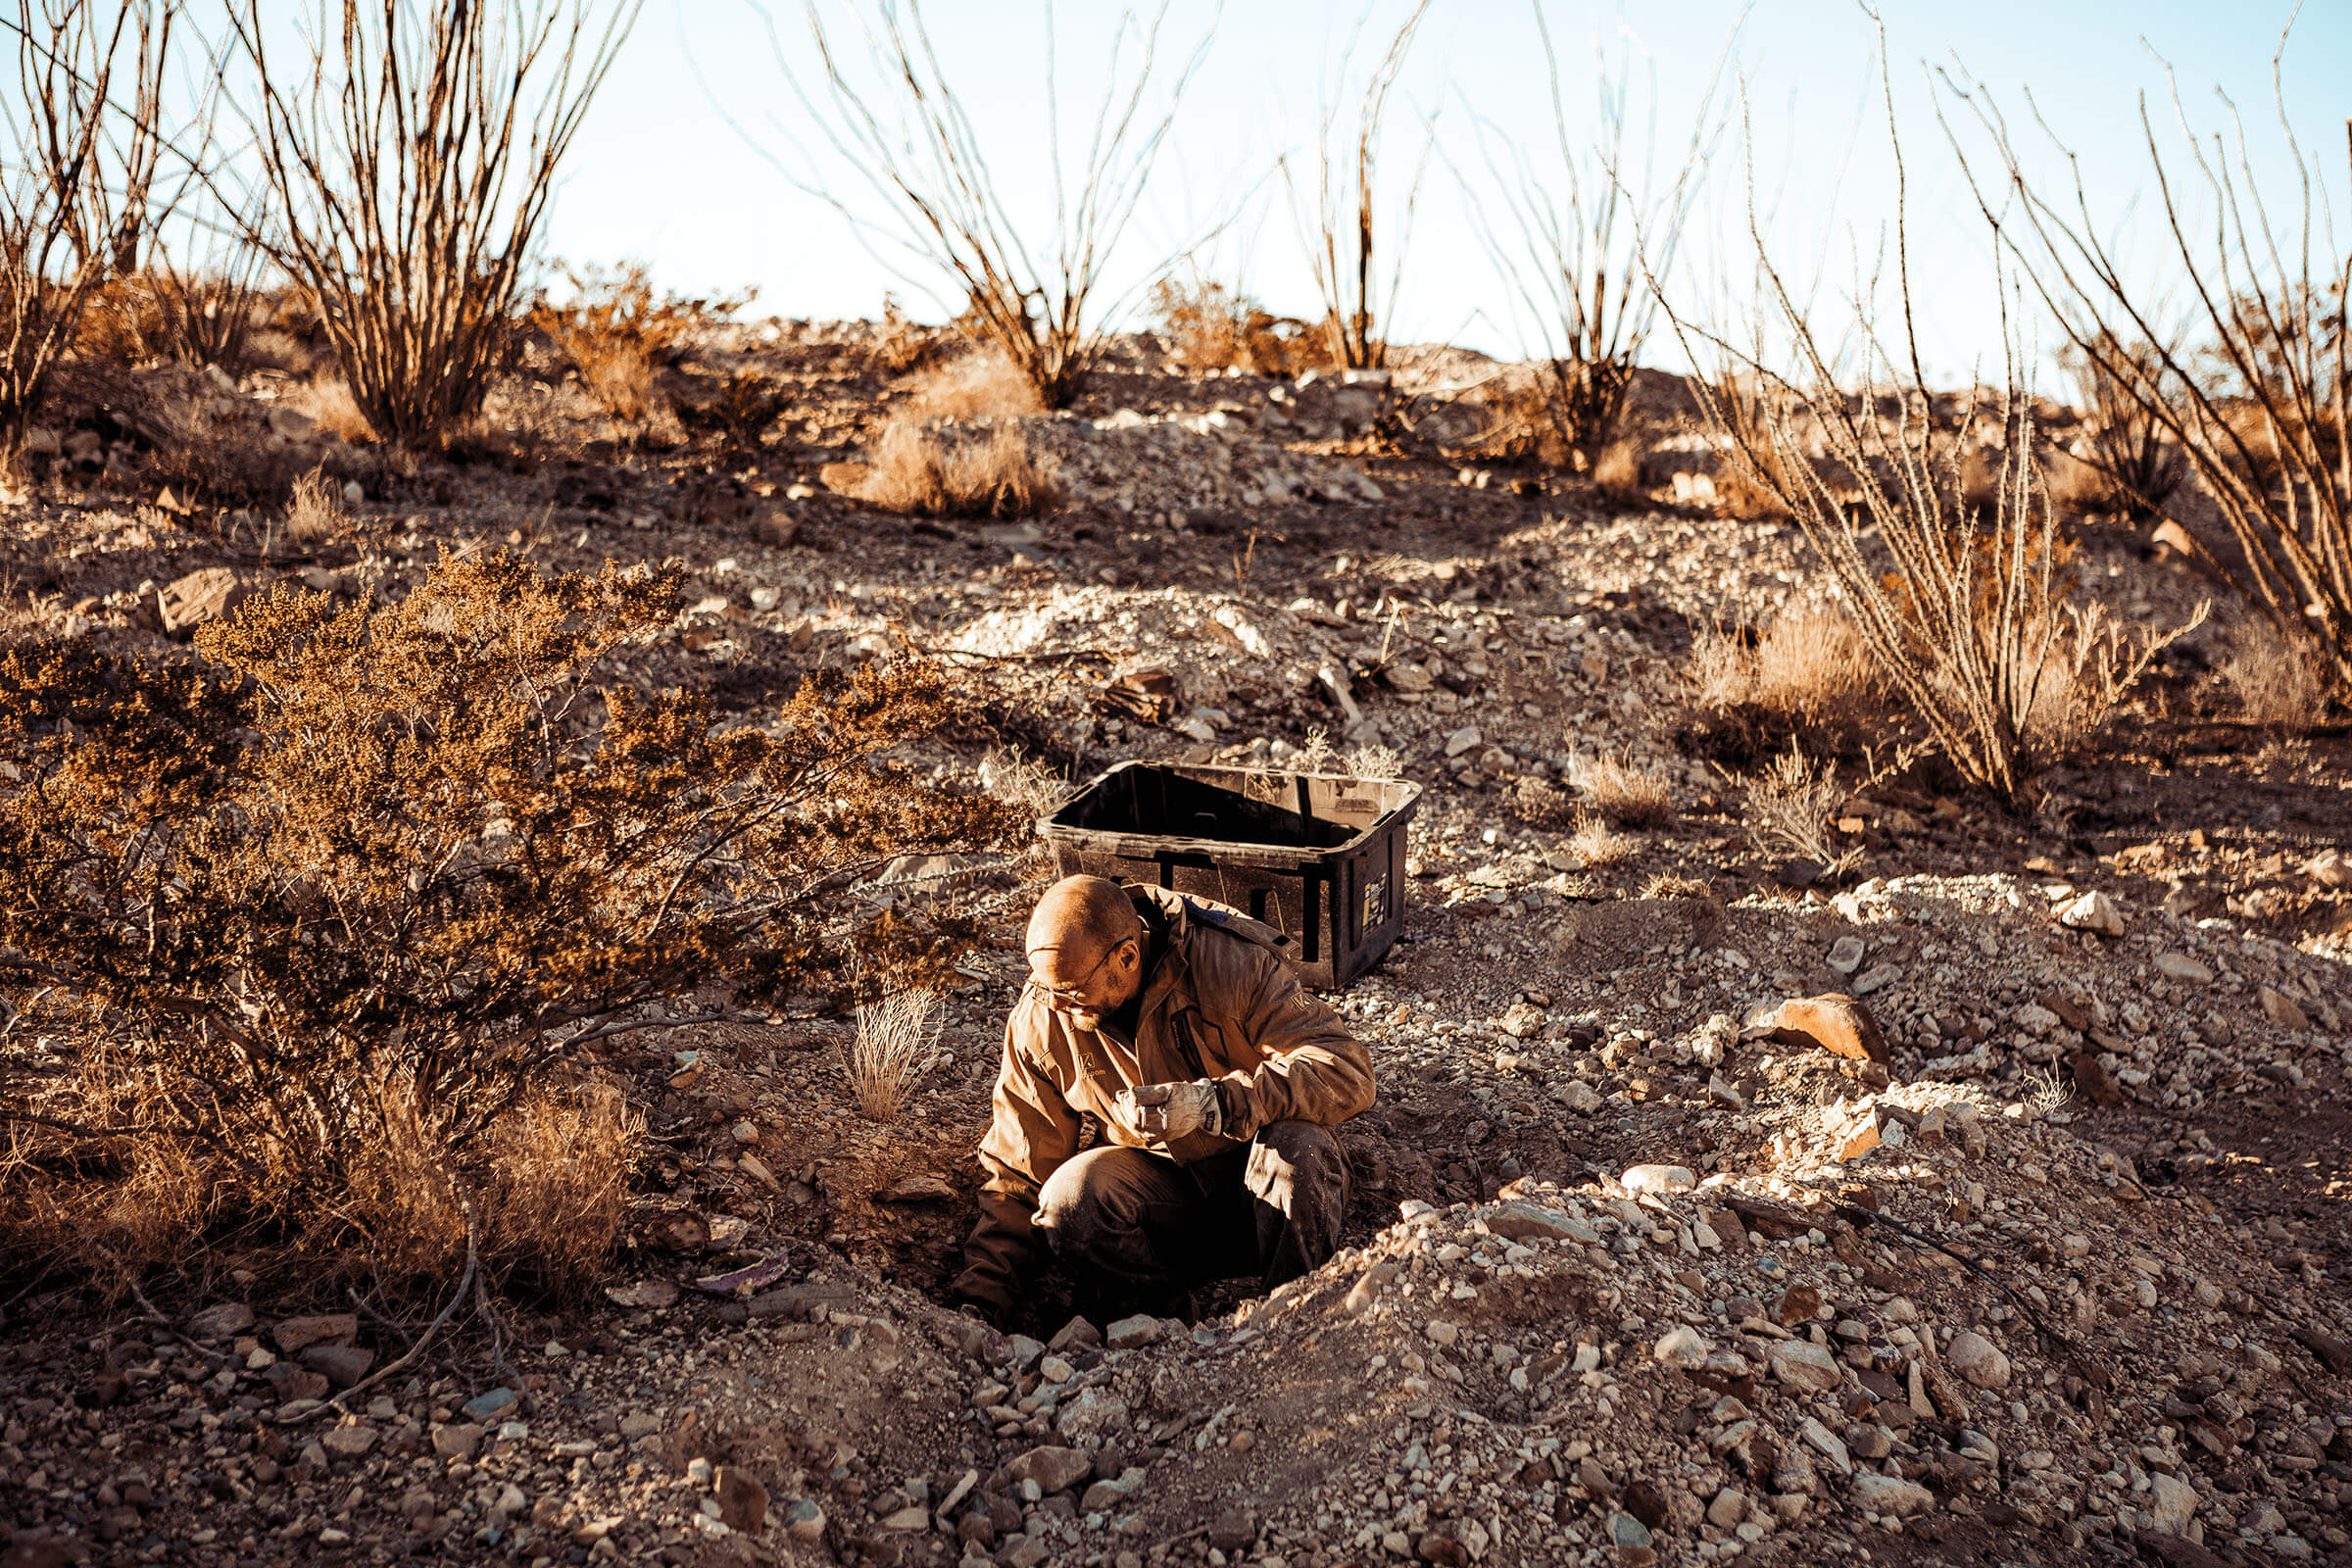 A man digs in a dirt hole in a desert landscape